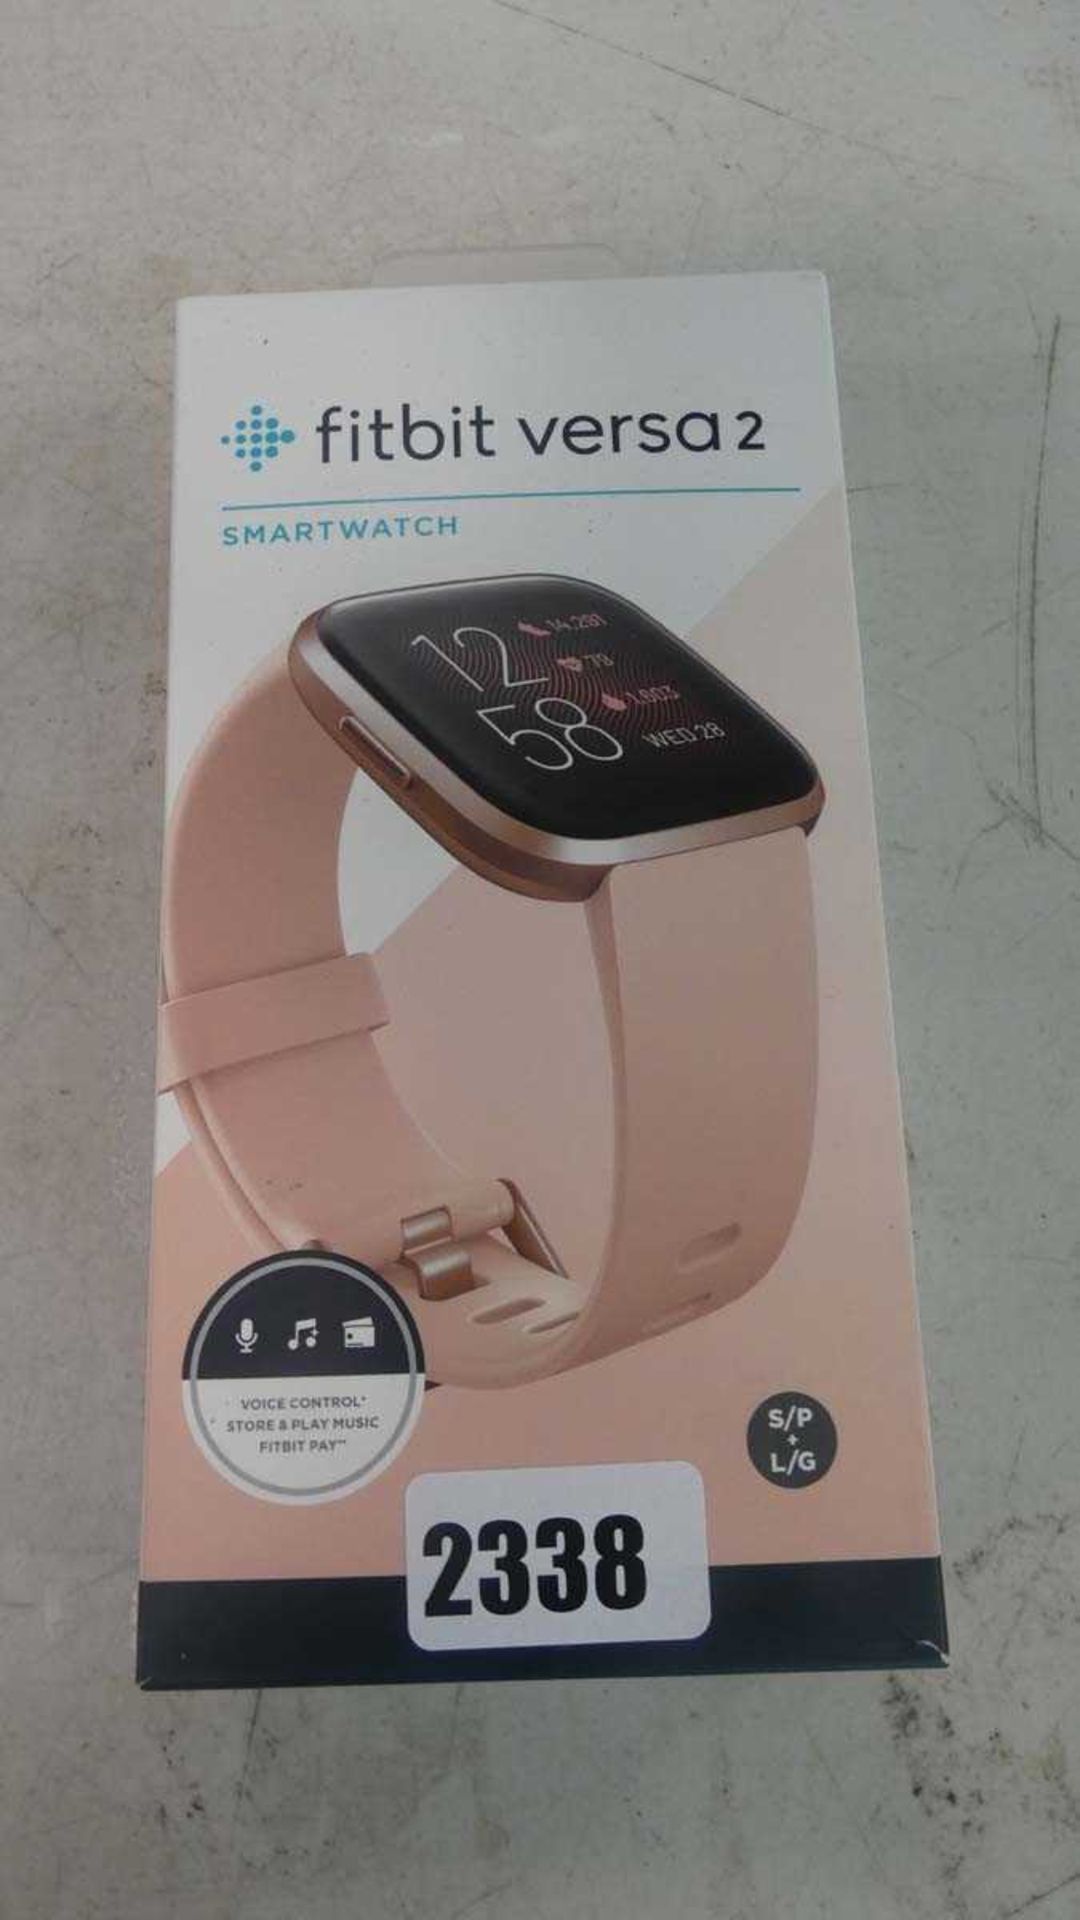 Fitbit Versa 2 smart watch in box